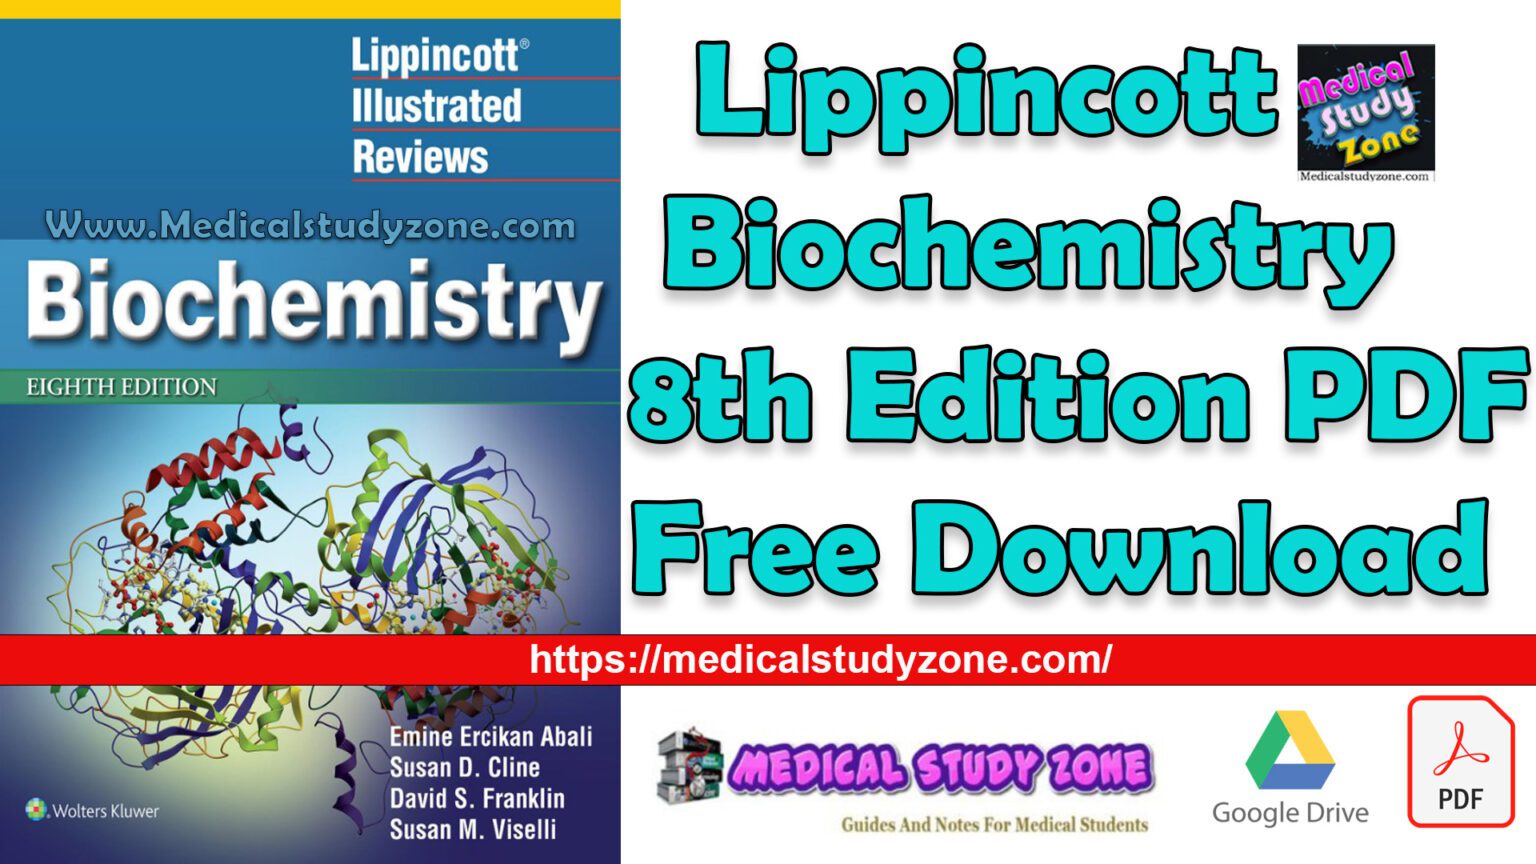 lippincott-biochemistry-8th-edition-pdf-free-download-direct-link